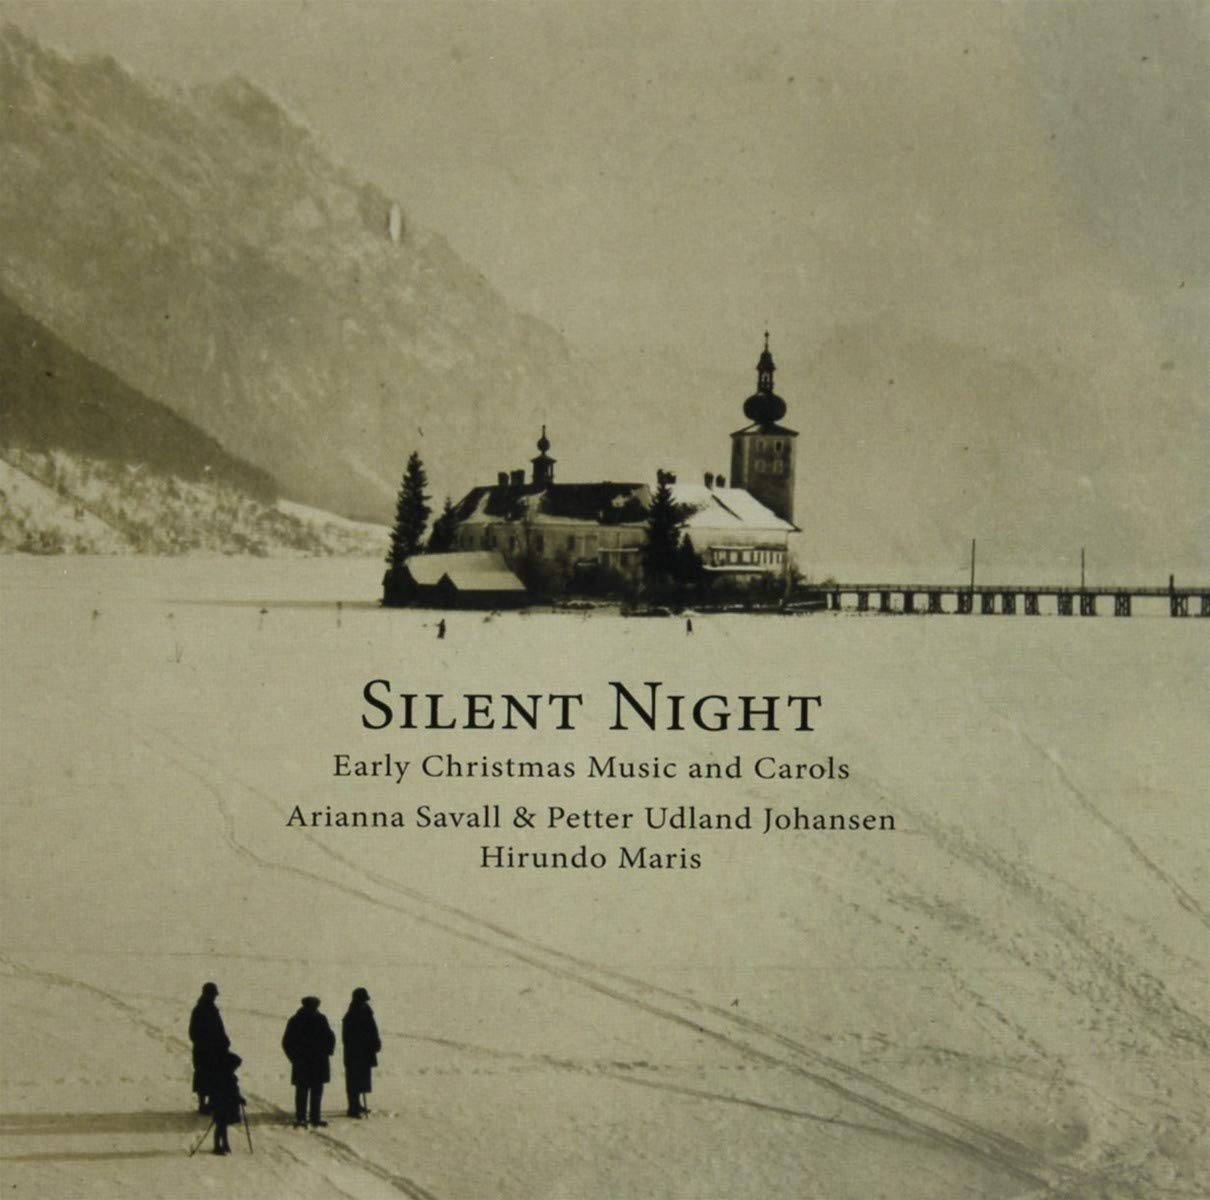 Silent Night - Early Christmas Music & Carols | Arianna Savall, Petter Udland Johansen, Hirundo Maris